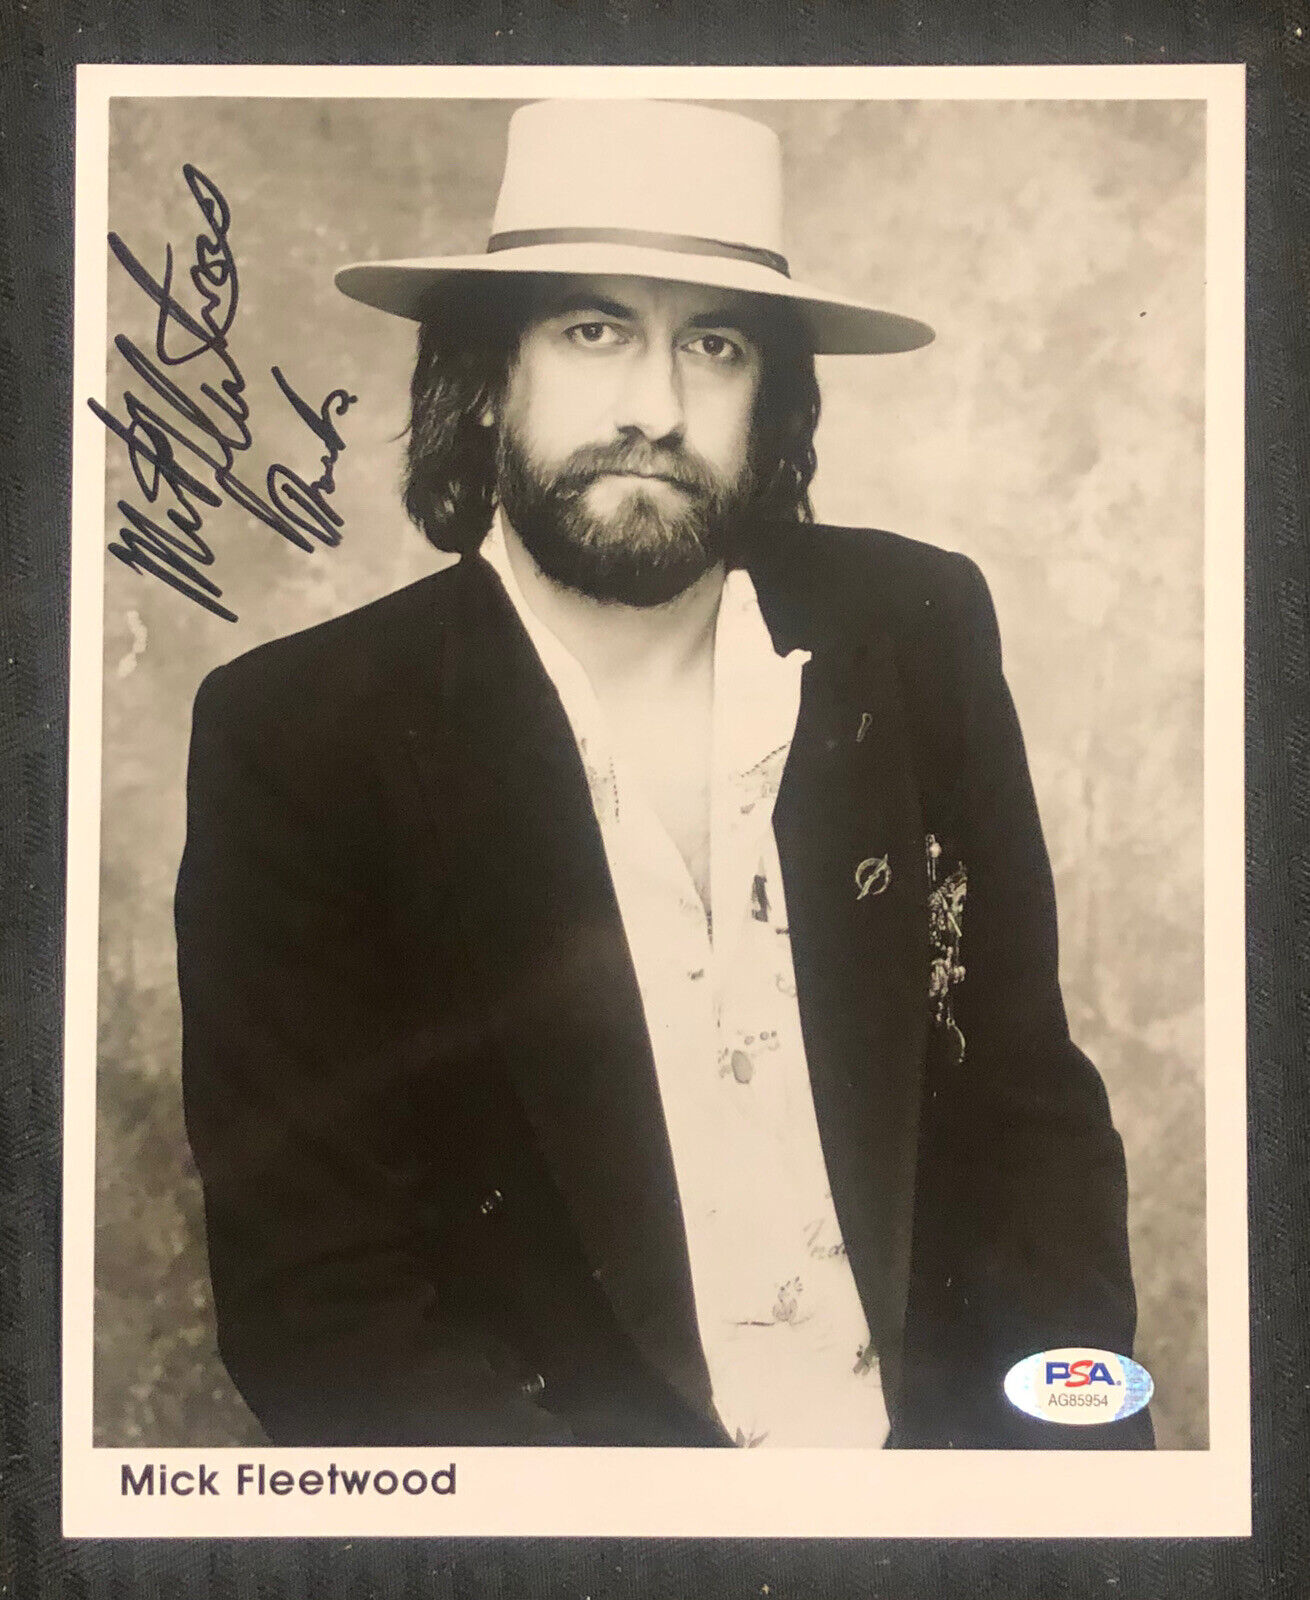 MICK FLEETWOOD Signed Autograph 8 x 10 Photo PSA - Fleetwood Mac Founding Member